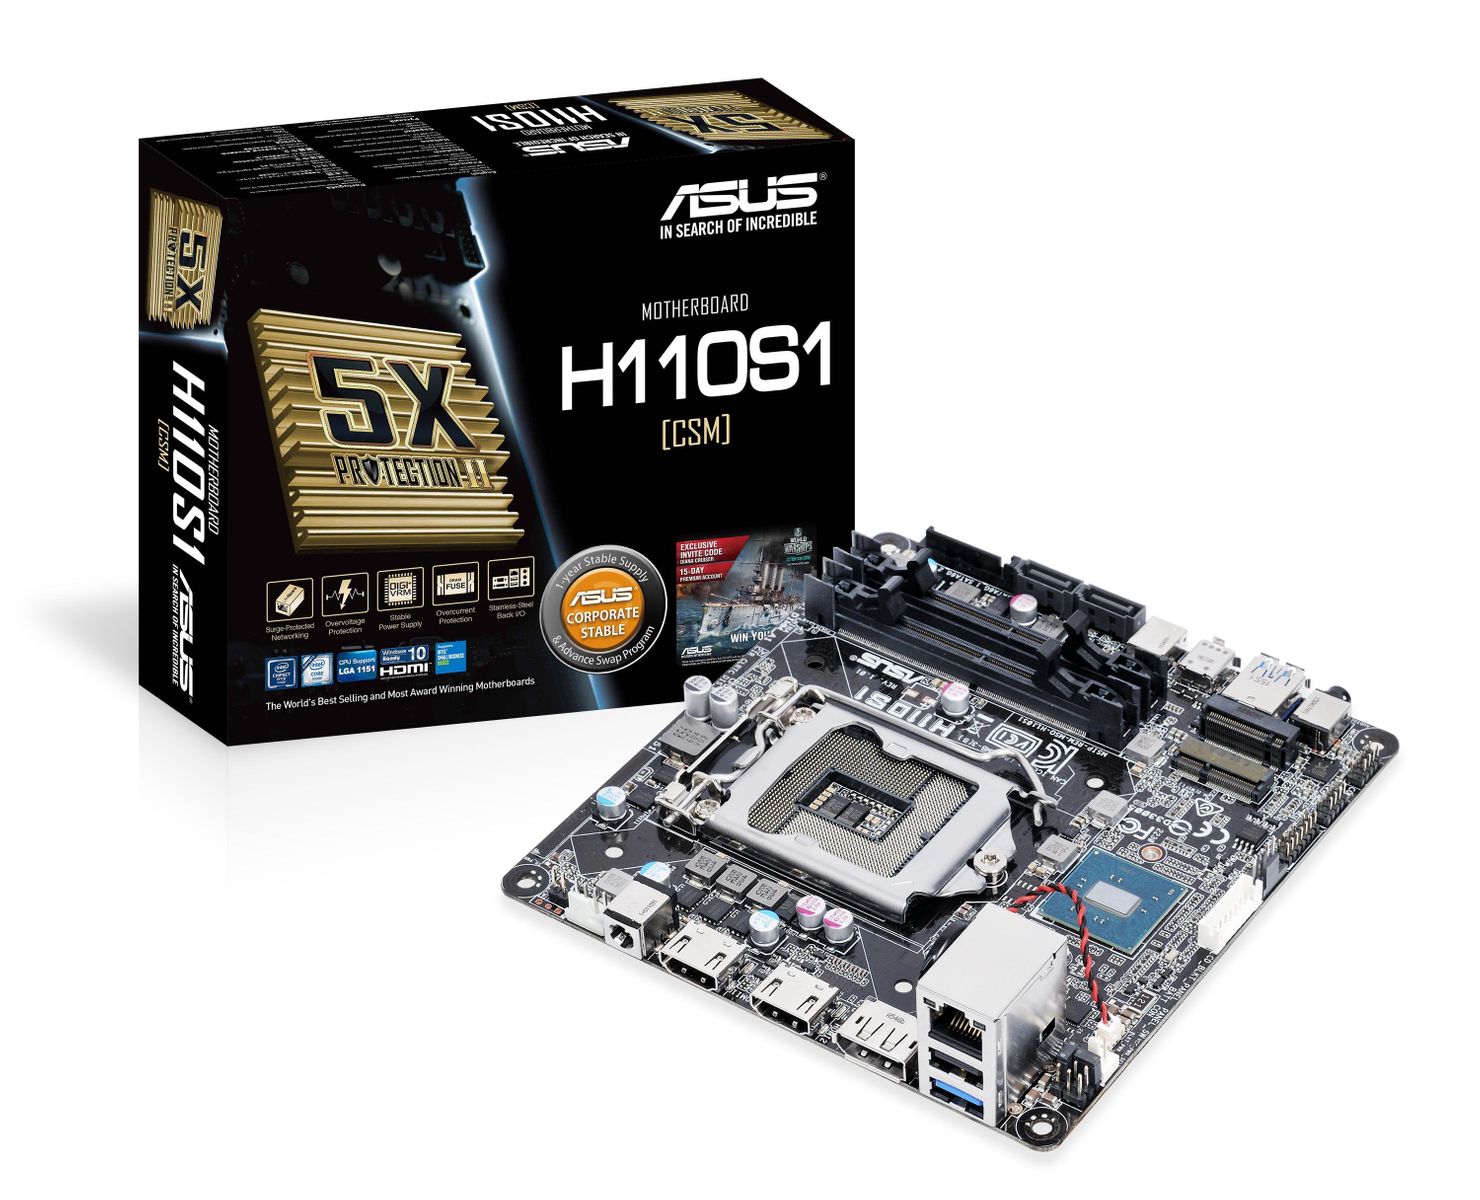 ASUS H110S1/C/SI Mini-STX Motherboard Mainboard für Intel Sockel 1151